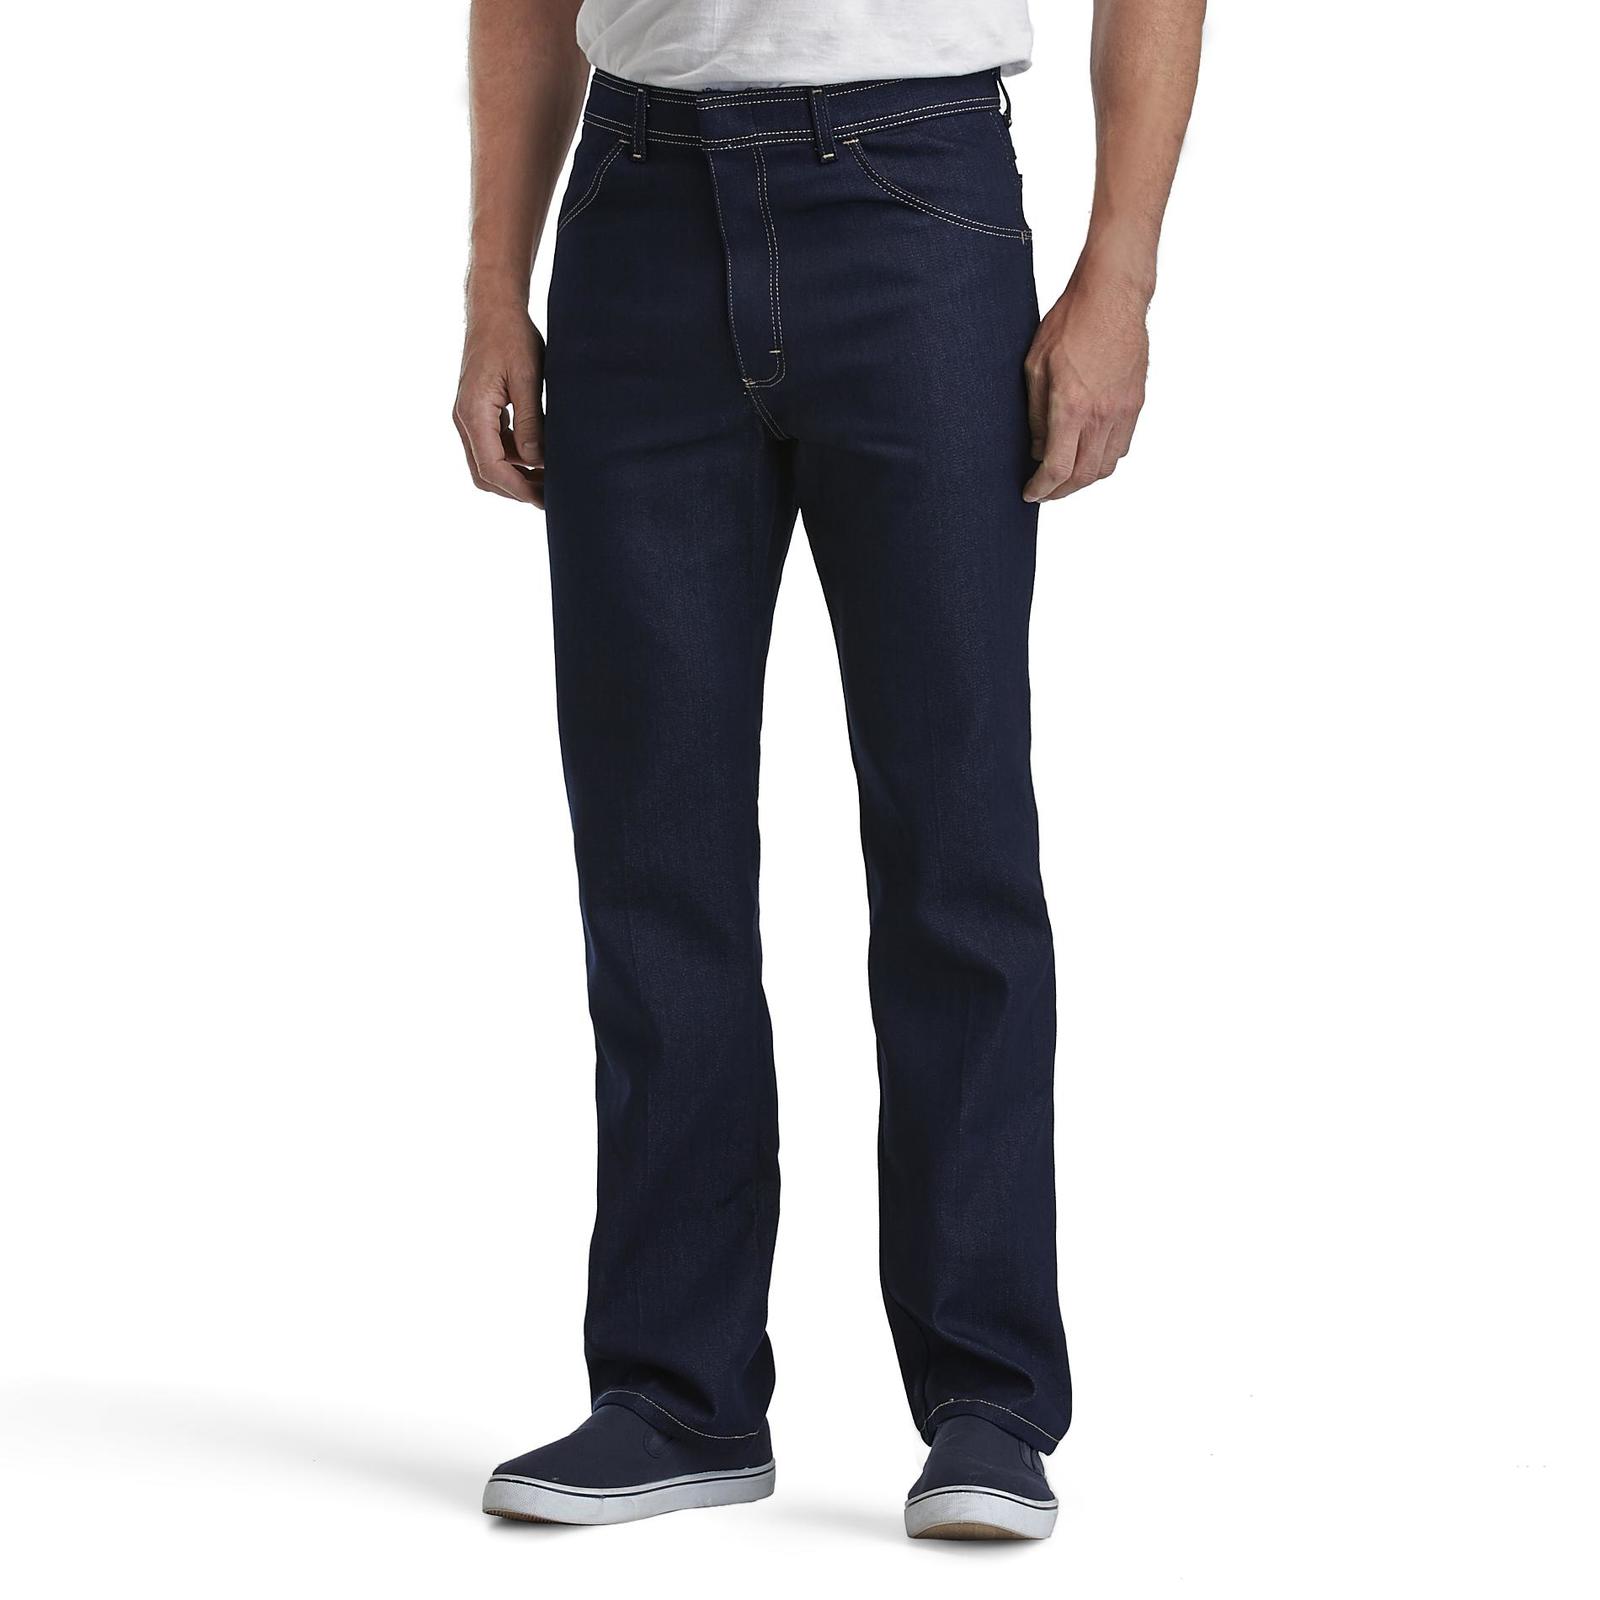 Basic Editions Men's Comfort Action Jeans - Regular Fit